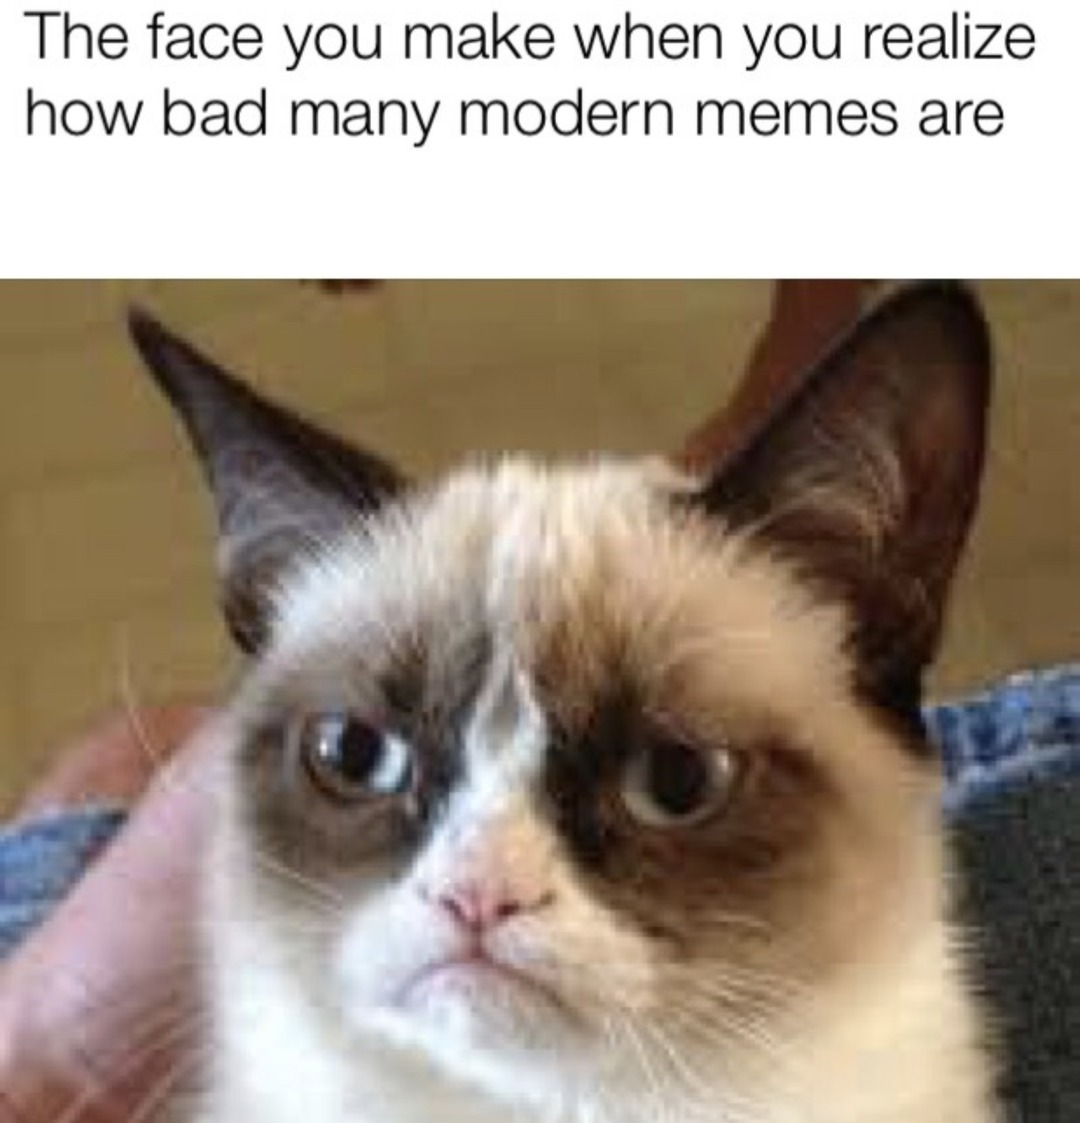 reject modernity - meme